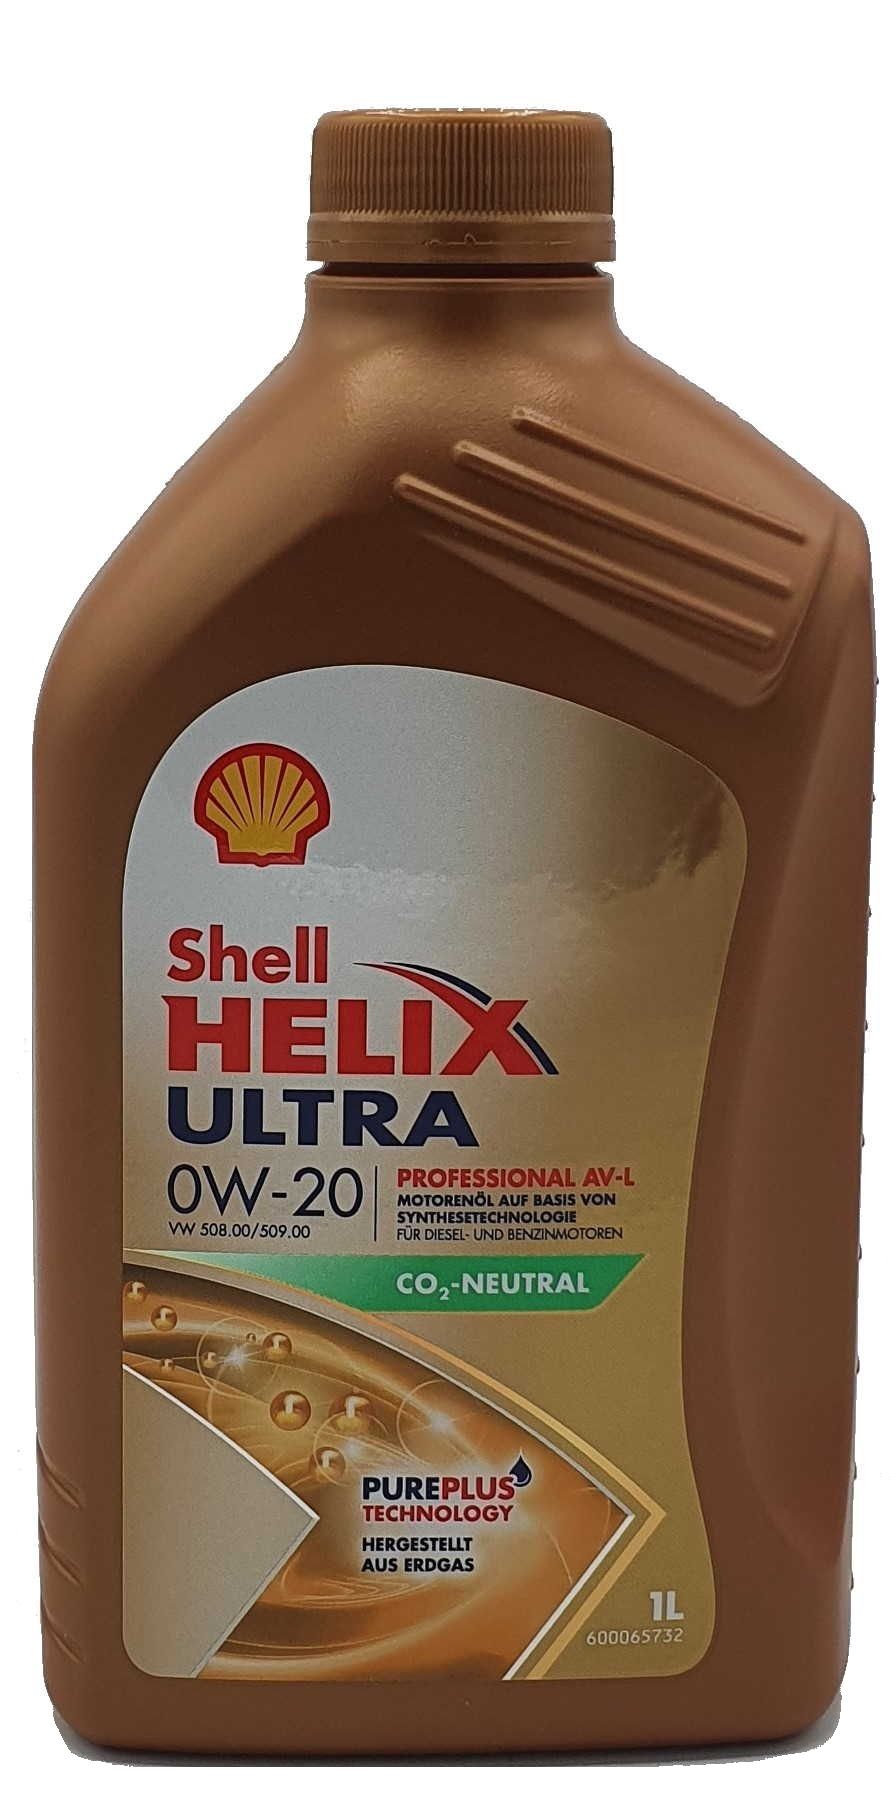 Shell Helix Ultra Professional AV-L 0W-20 1 Liter